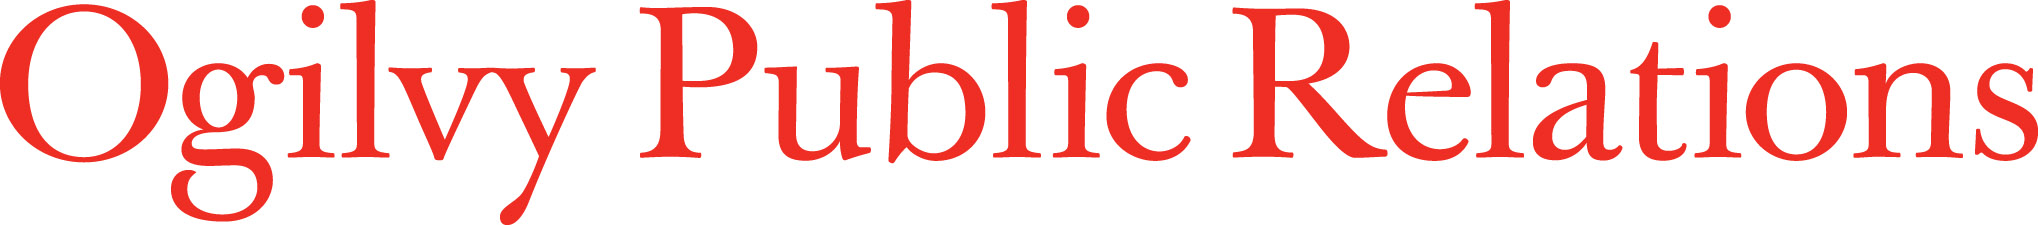  Leading Online PR Agency Logo: Ogilvy Public Relations